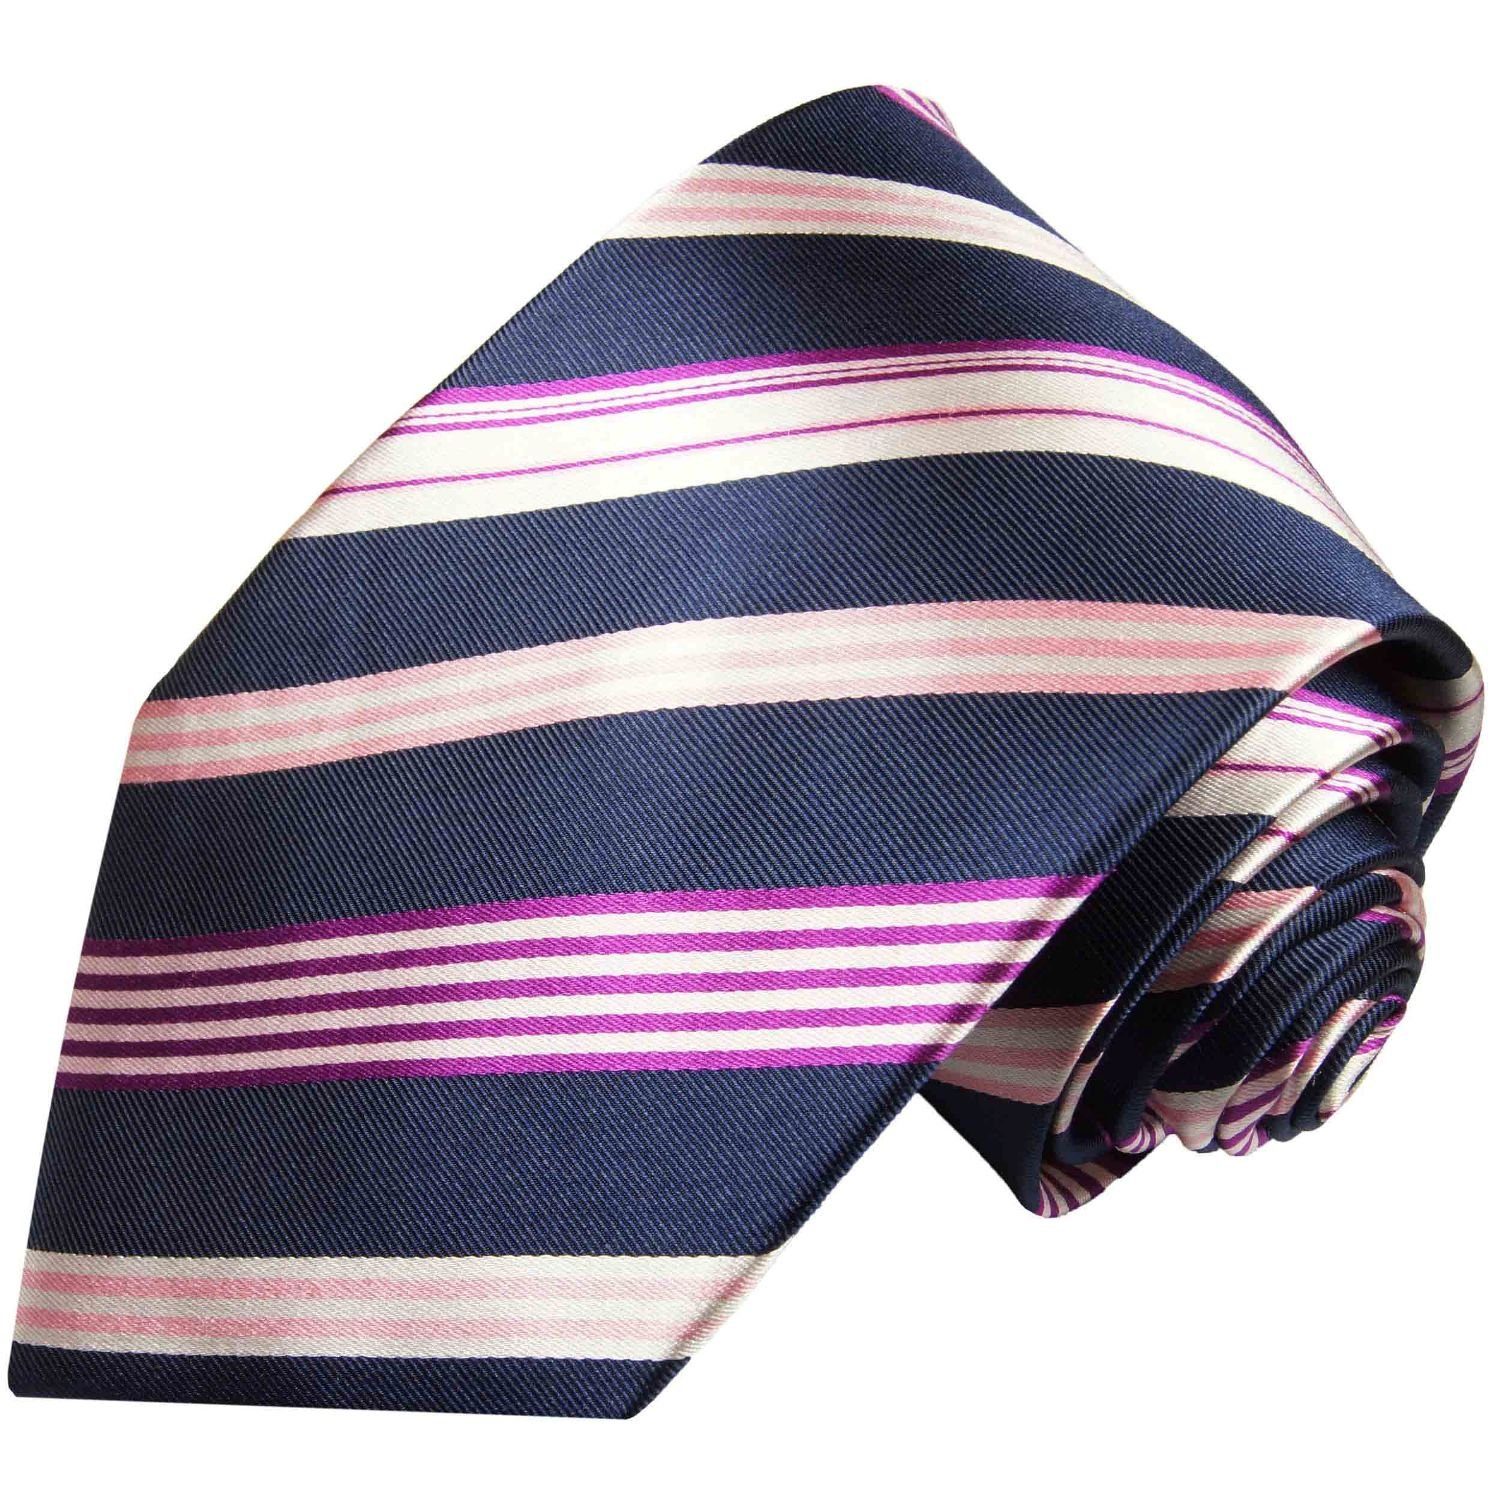 Paul Malone Krawatte Designer Seidenkrawatte Herren Schlips modern gestreift 100% Seide Schmal (6cm), dunkelblau pink 608